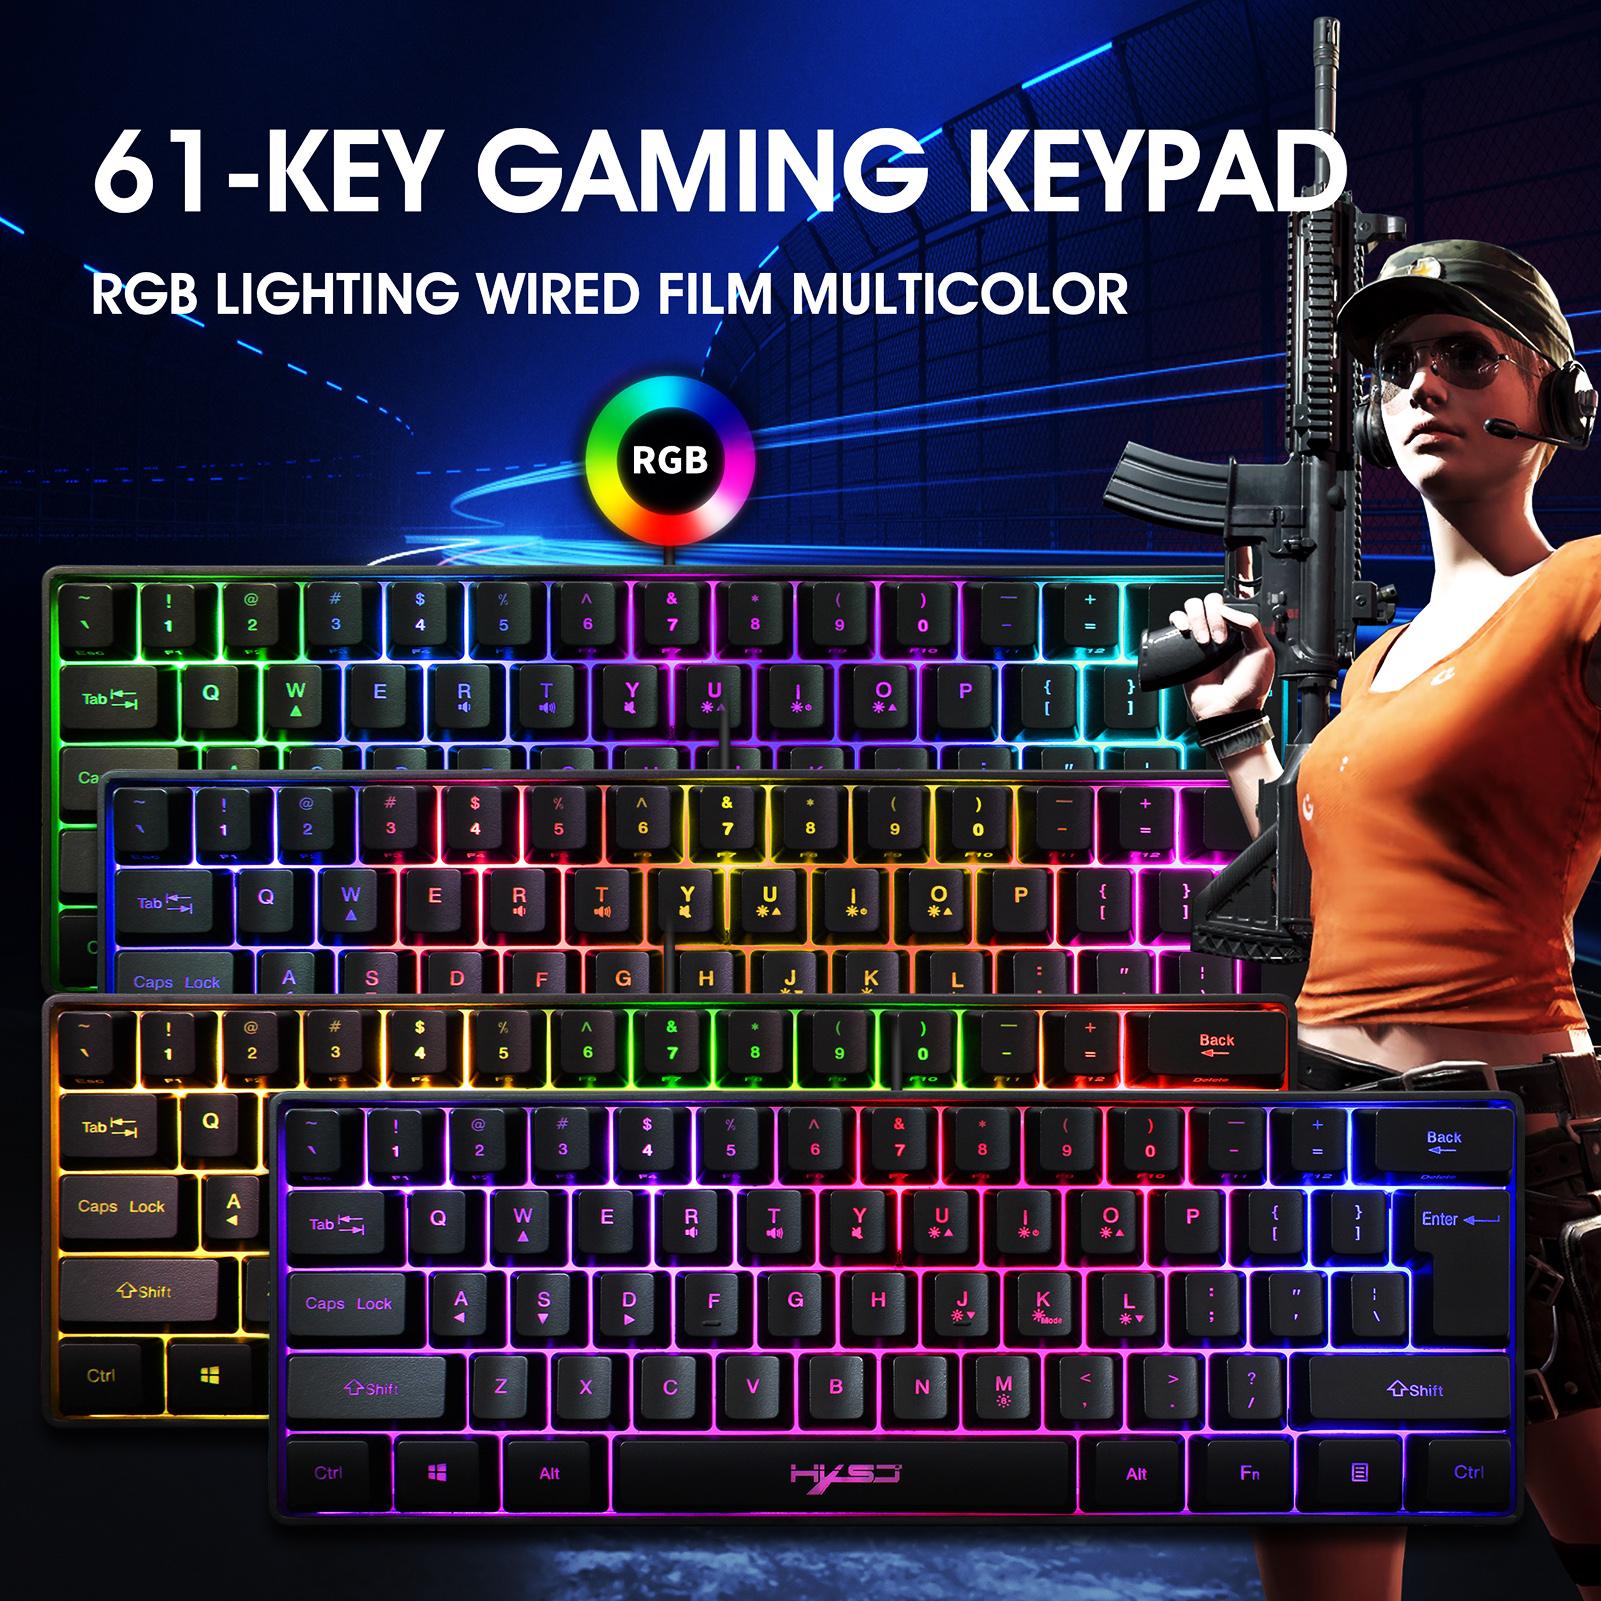 HXSJ V700 Wired Gaming Keyboard RGB Streamer Wired Keyboard 61-key Gaming Keyboard for Game/Office Black